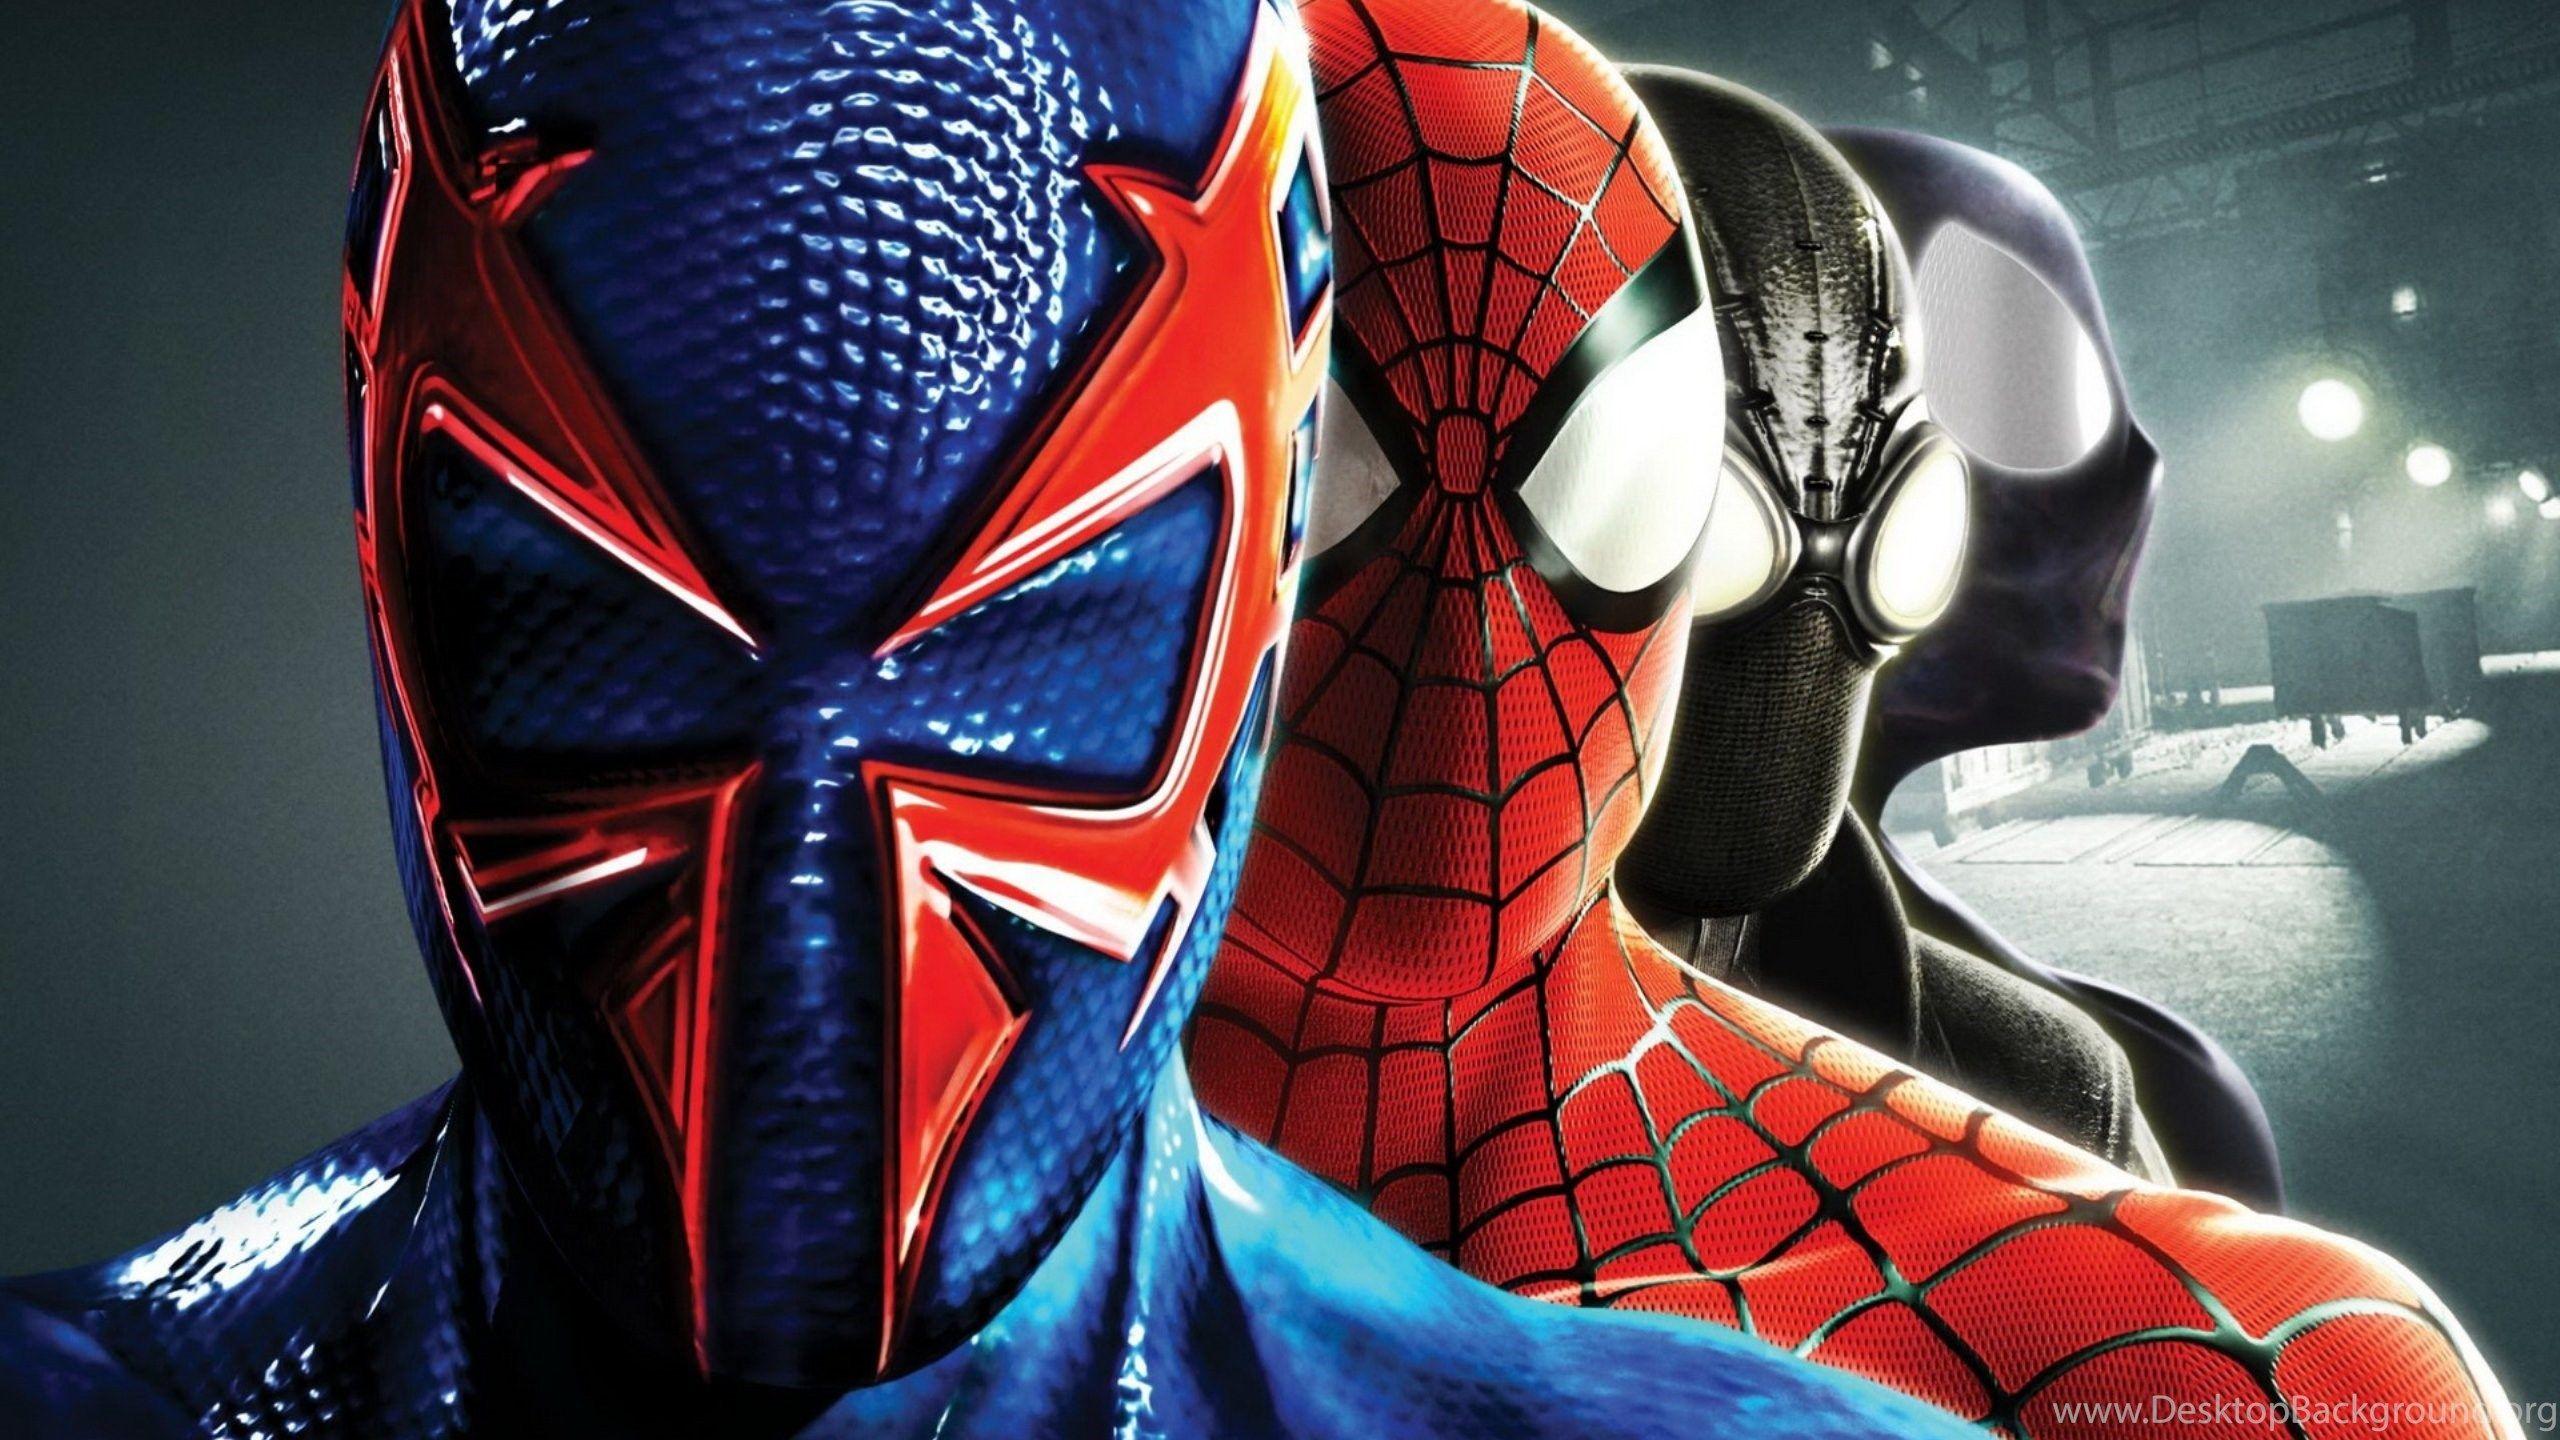 SPIDER MAN Superhero Marvel Spider Man Action Spiderman Wallpaper